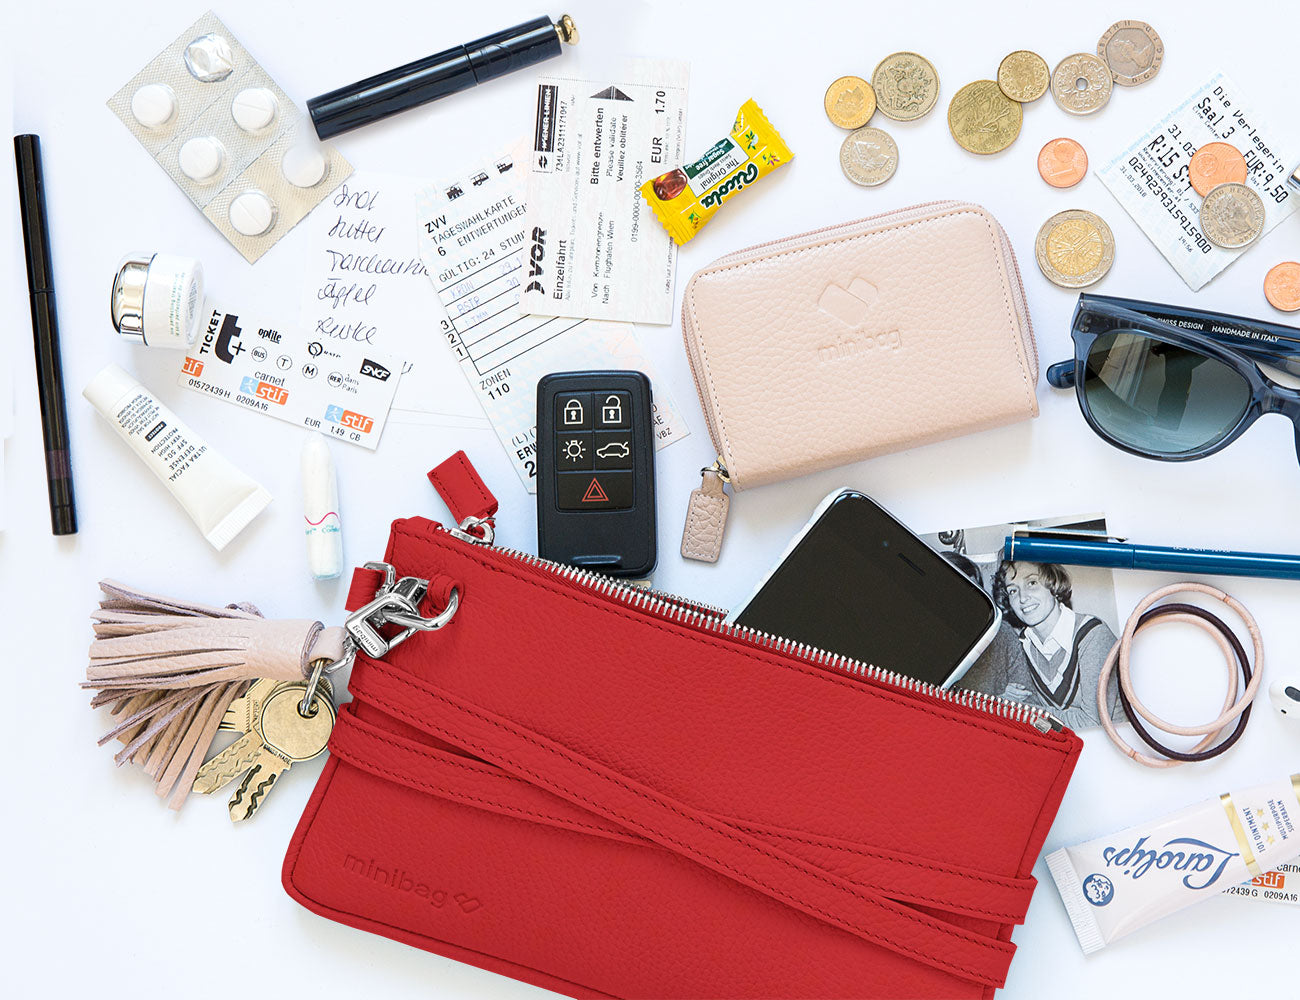 minibag red, Ledertasche rot, Clutch rot, minibag Wallet nude, Quaste nude, Geldtasche zum Umhängen  Edit alt text